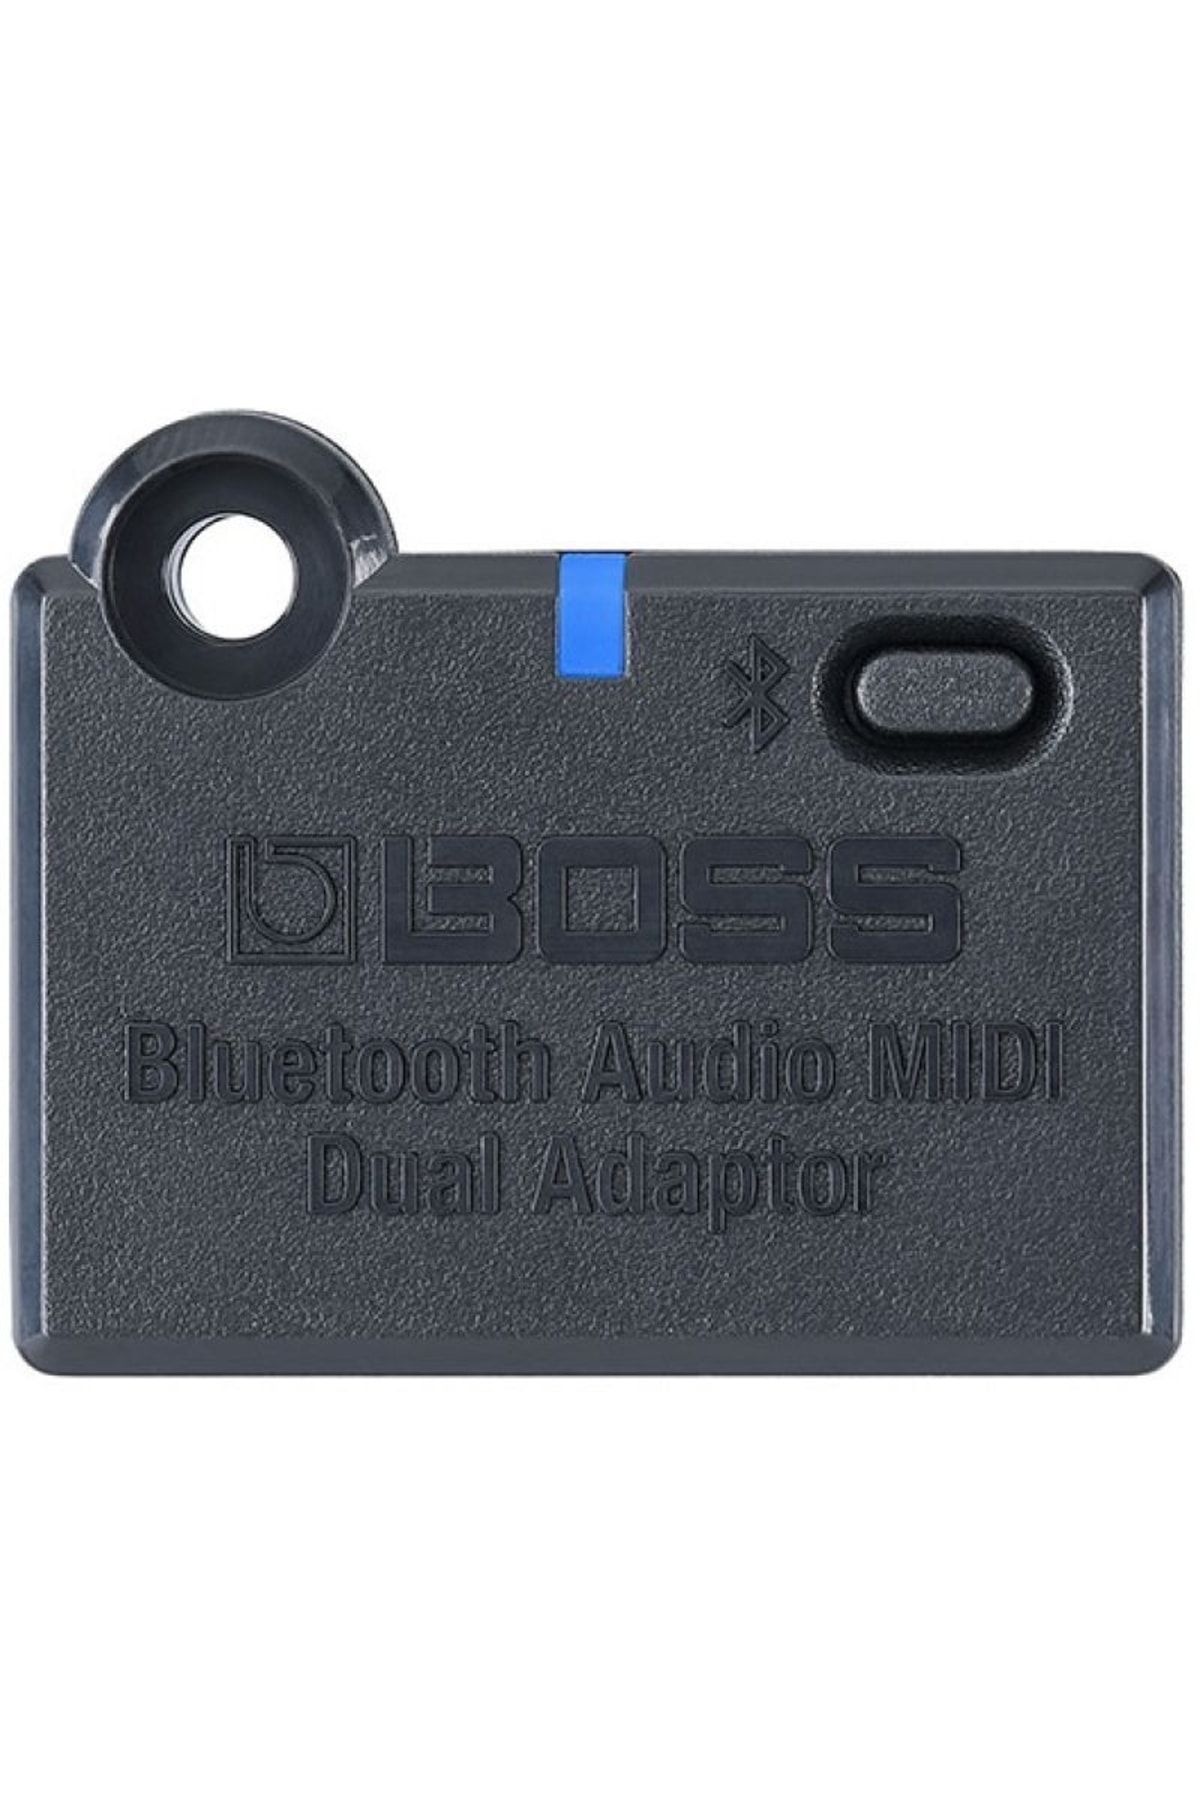 BOSS Roland Bt-dual Bluetooth Audio Adaptor